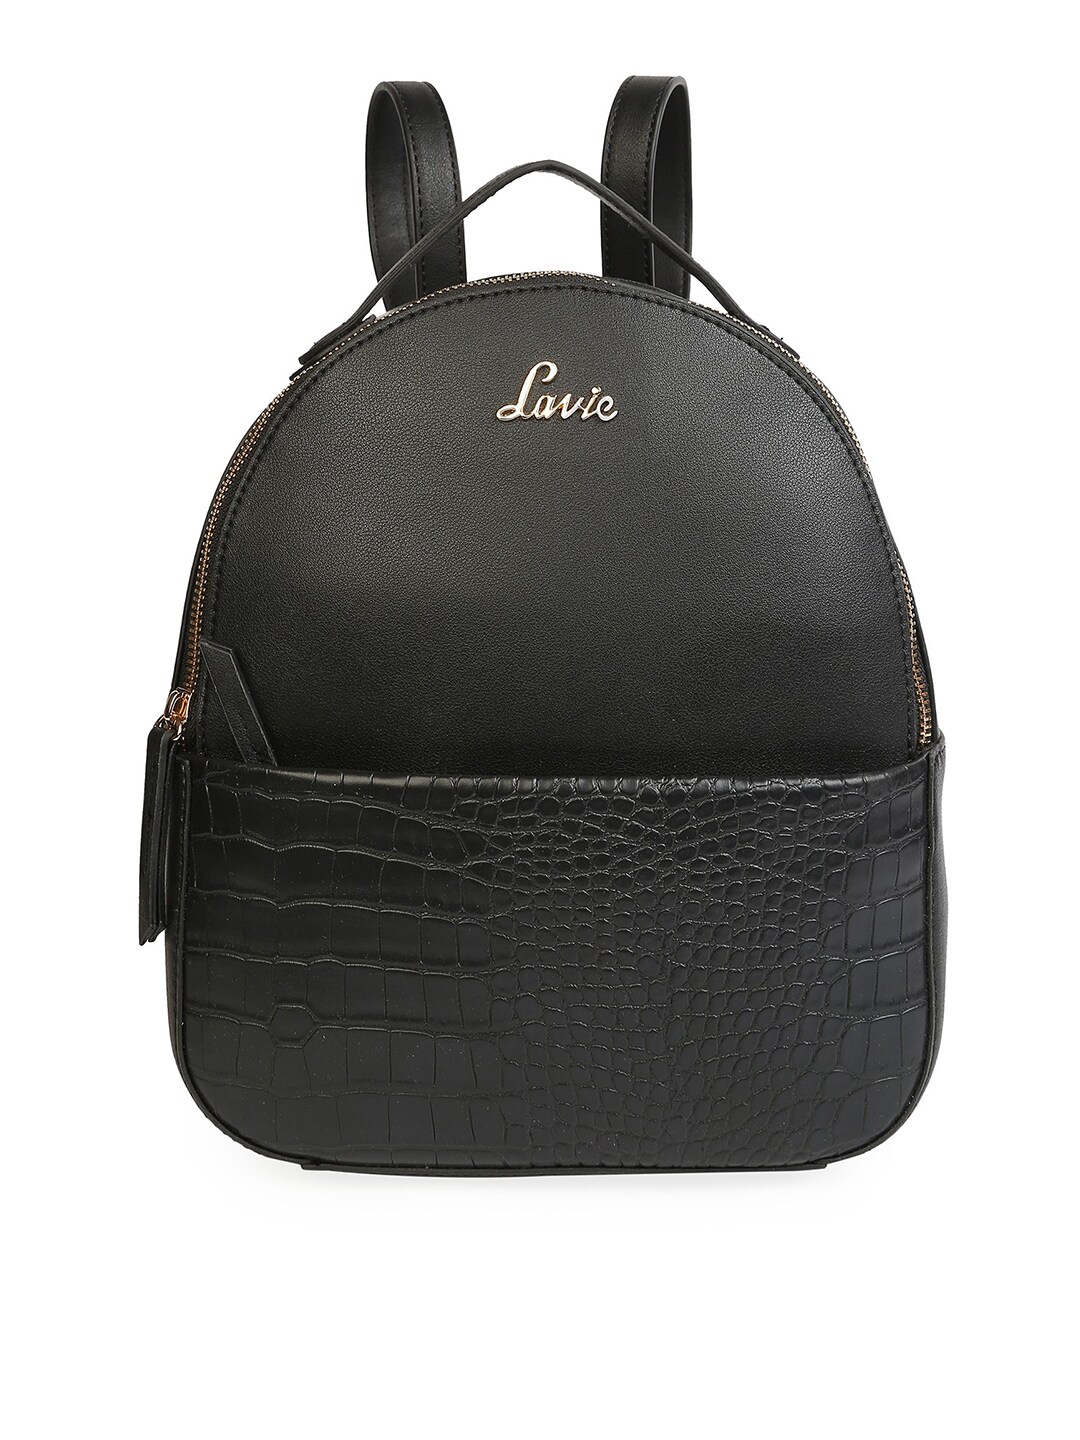 Lavie Women Black Croc-Textured Backpack Price in India